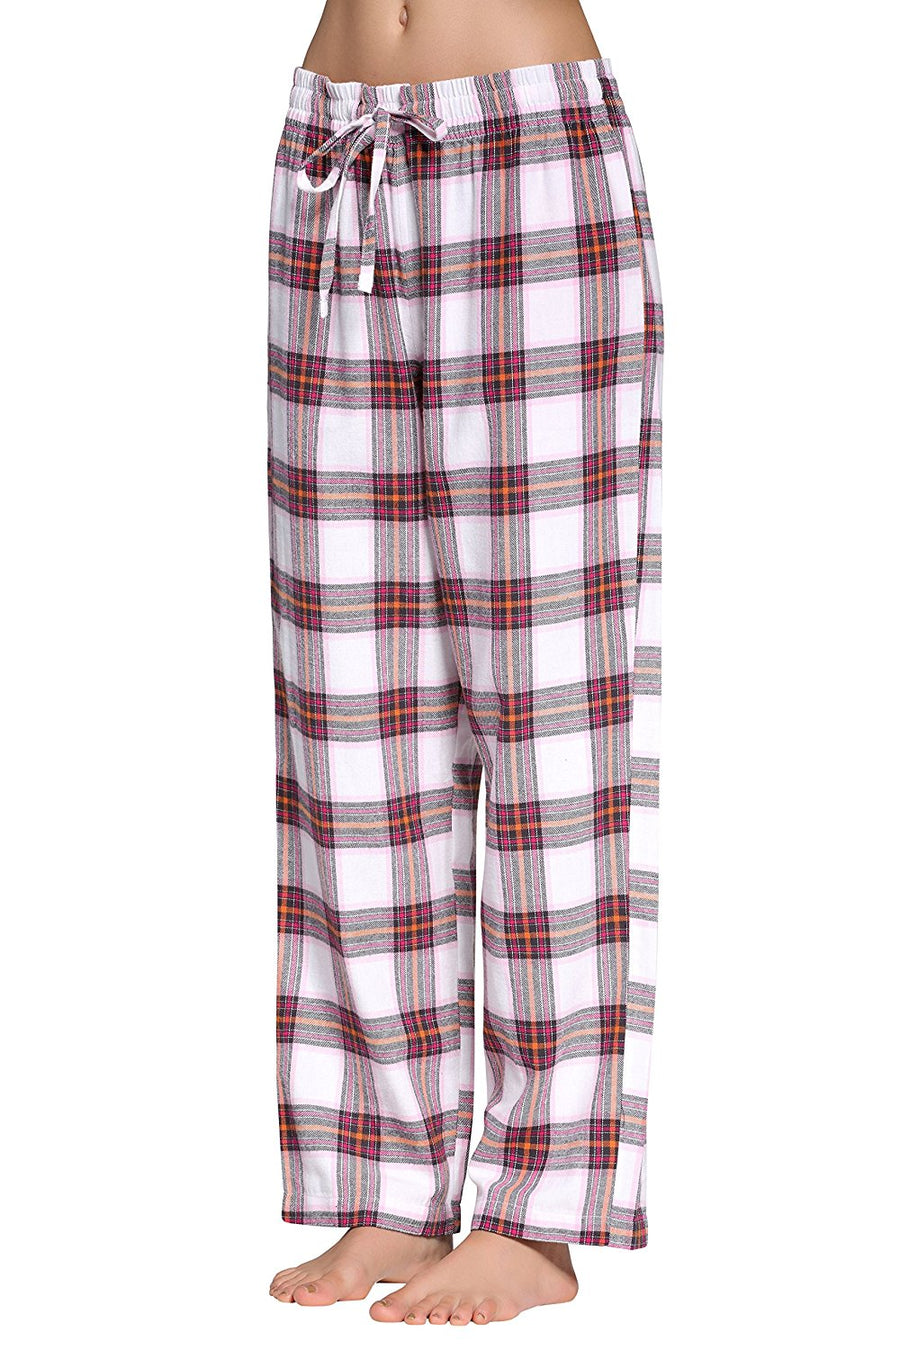 Women's Extra Tall Flannel Pajama Pants Extra Long Pj Pants Teal Pink White  Plaid Flannel Pjs Custom Inseam Pyjamas 35-39 Inseam -  Canada